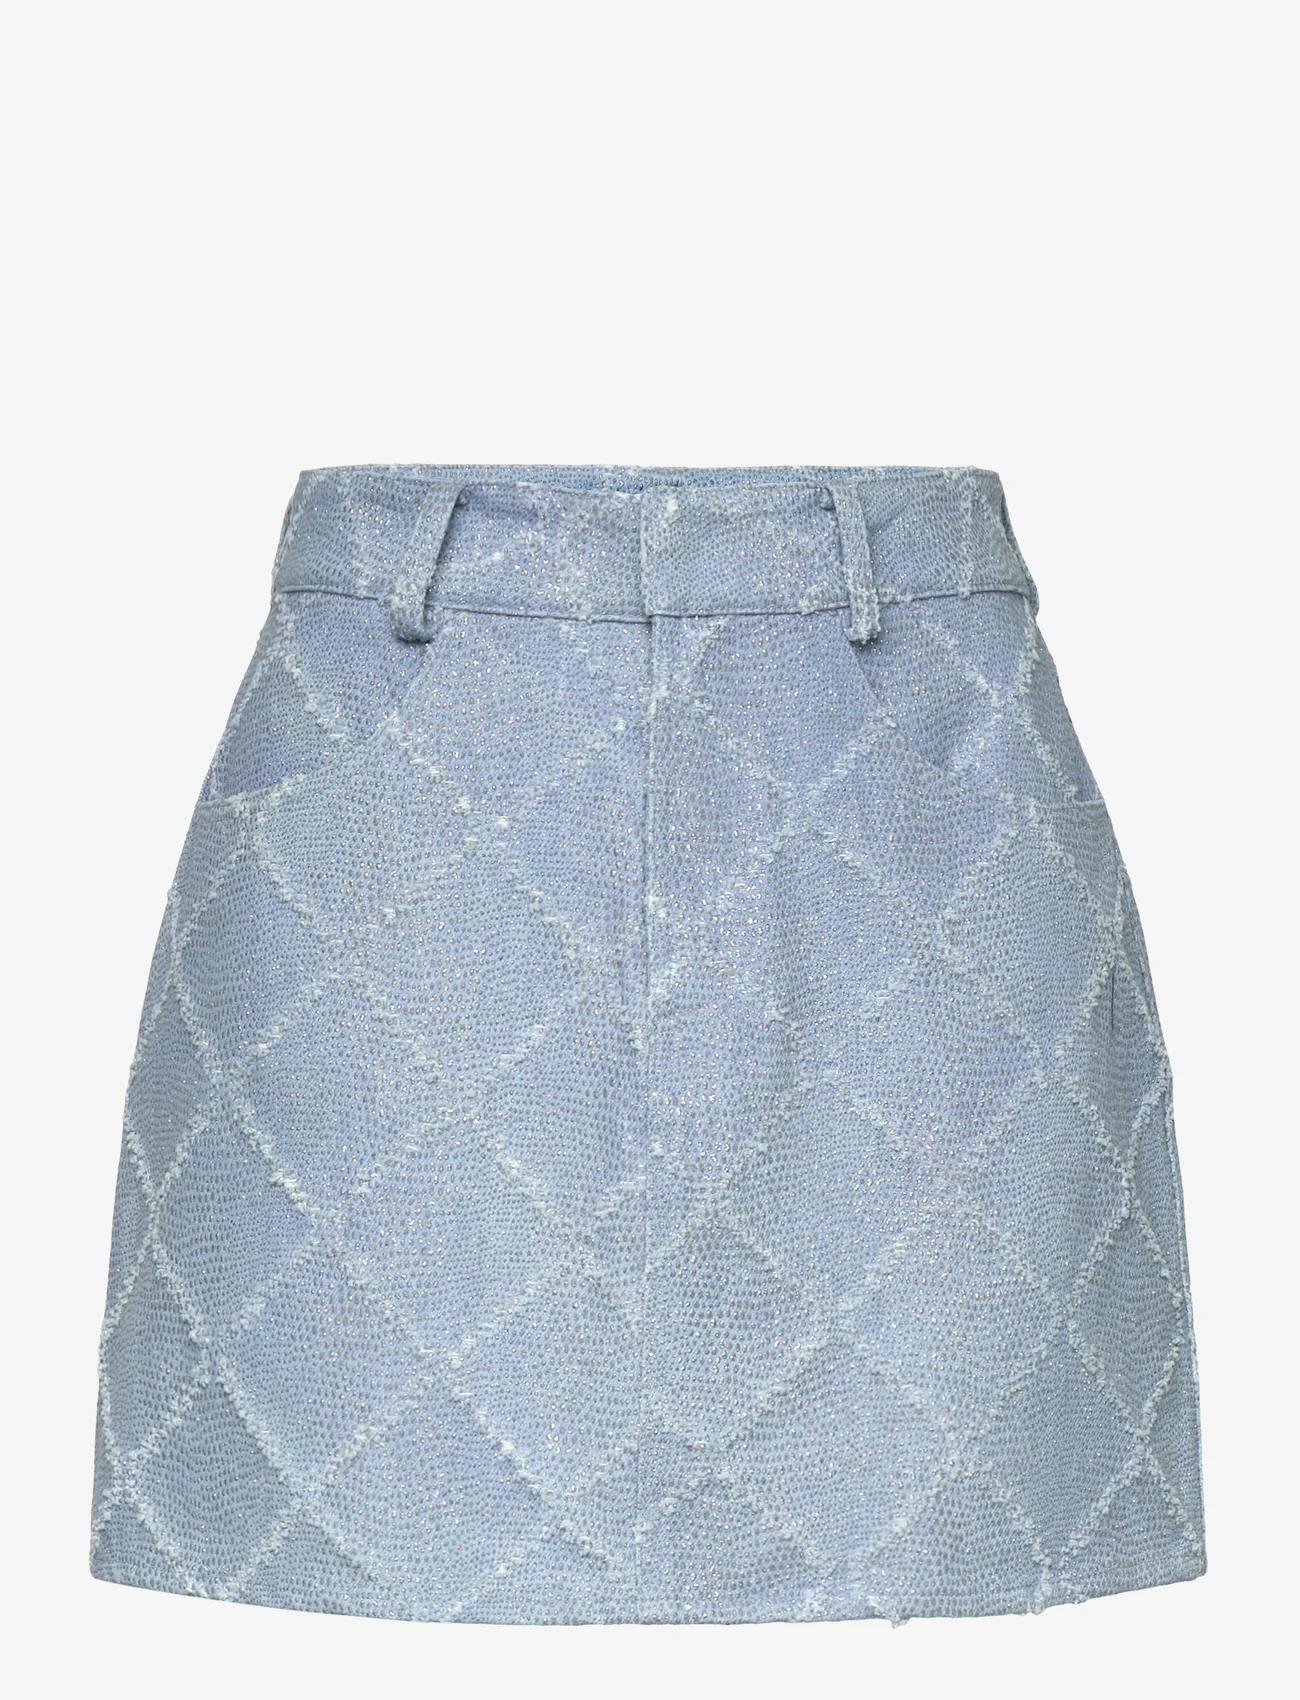 Cras - Northcras Skirt - kurze röcke - sparkle denim - 0